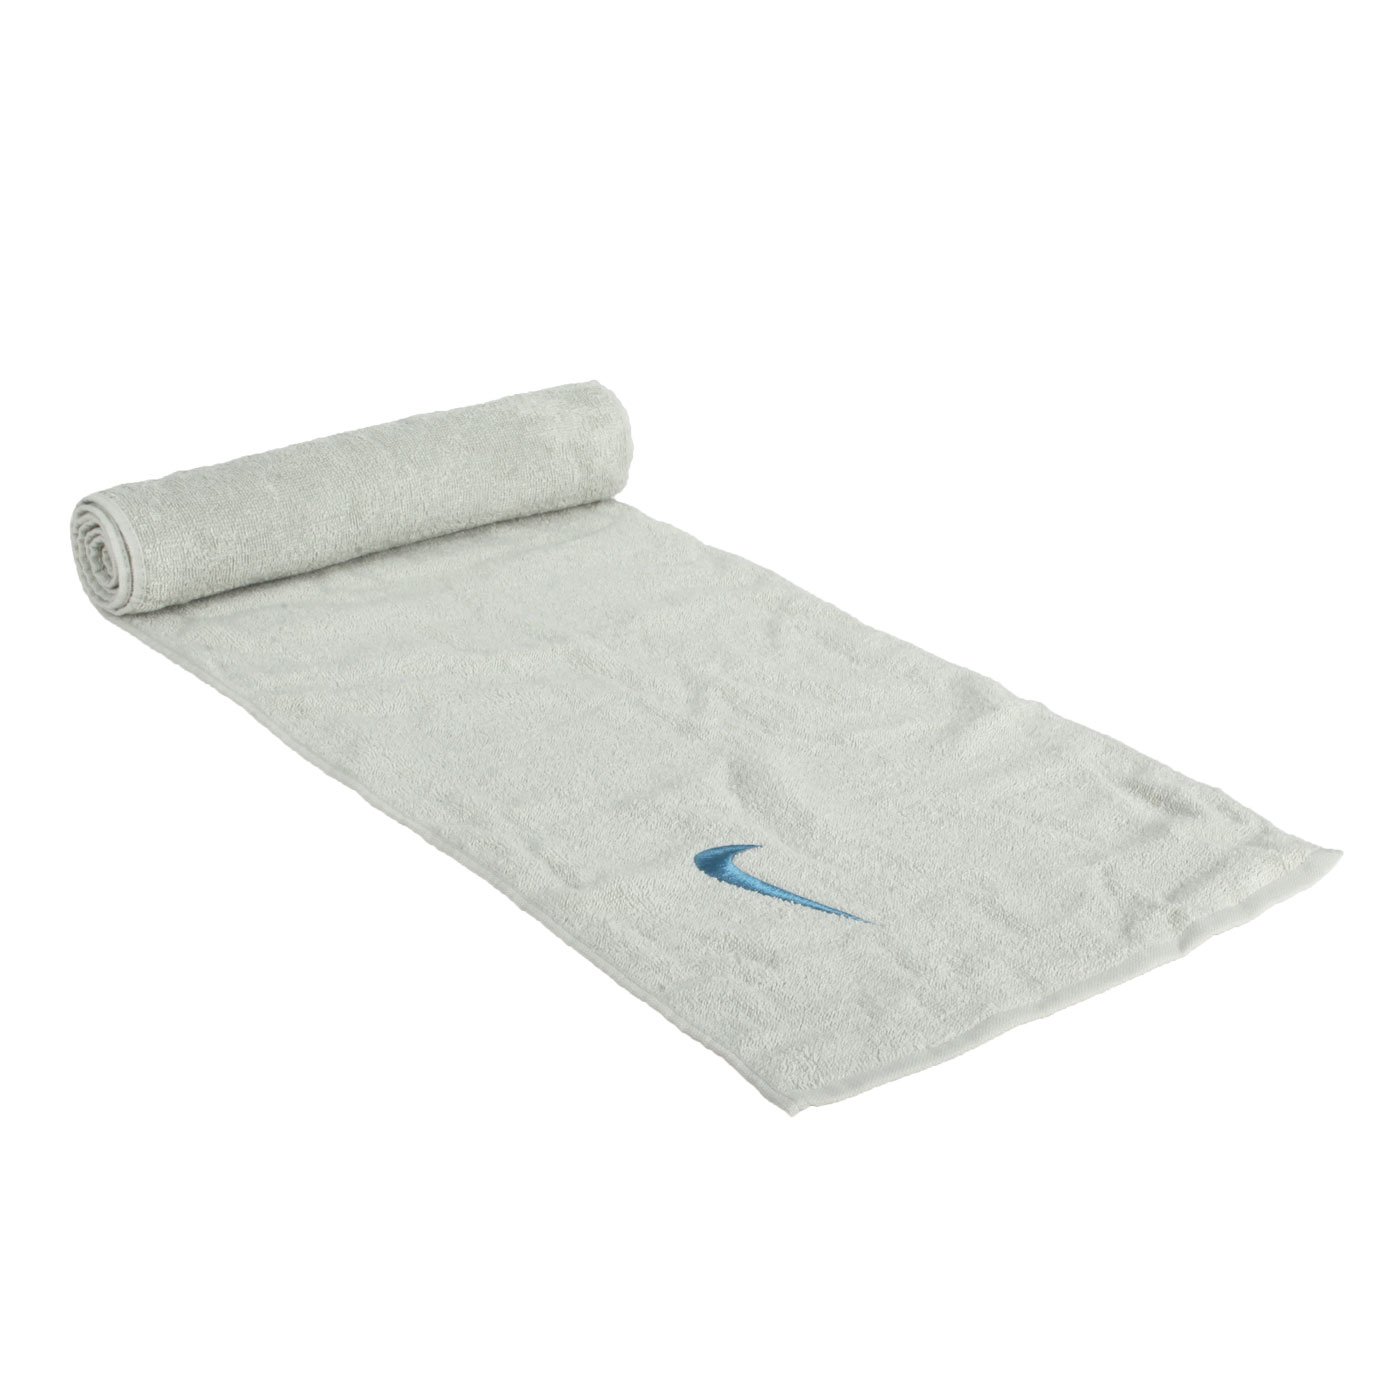 NIKE SOLID CORE 長型毛巾(120x25cm)  N1001540050NS - 米綠深湖藍